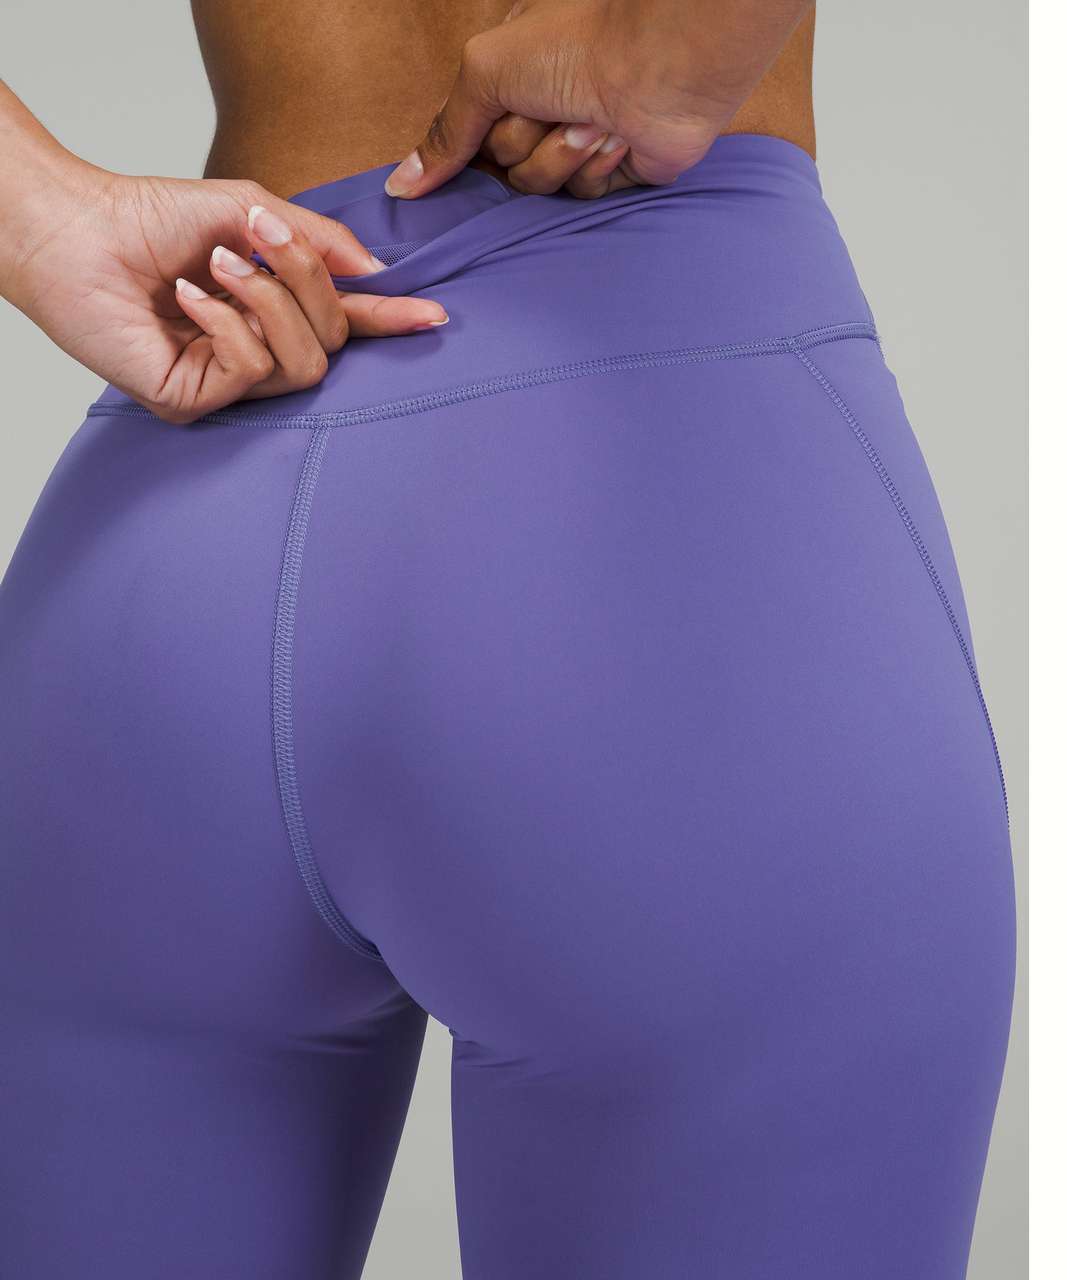 Lululemon legging- Base pace High Rise reflective tights 25” (size